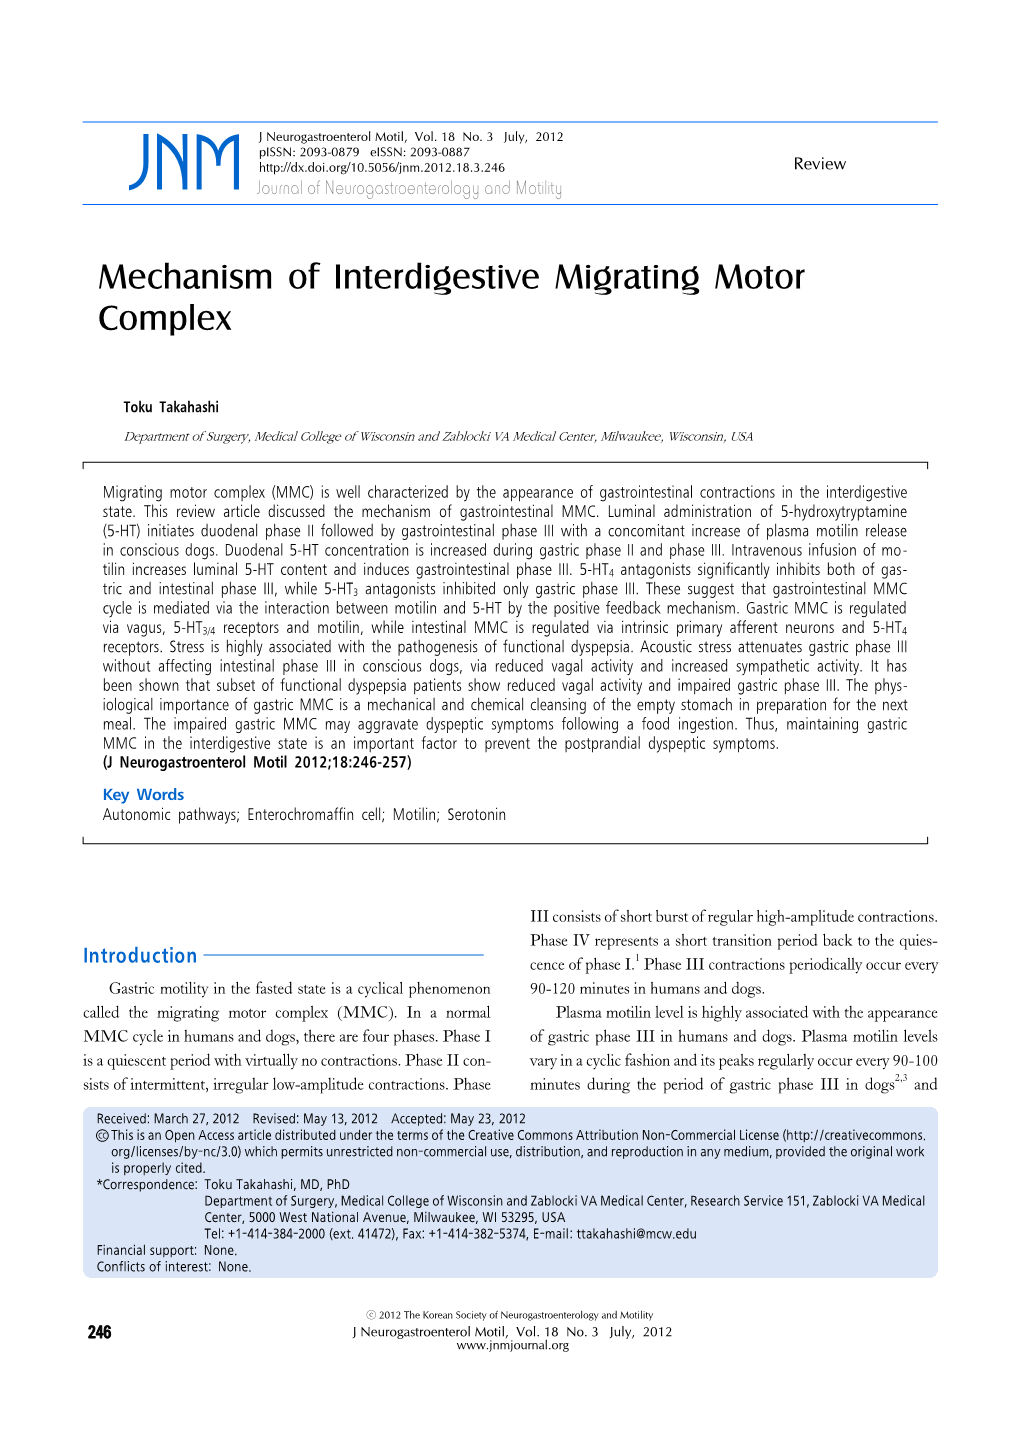 Mechanism of Interdigestive Migrating Motor Complex